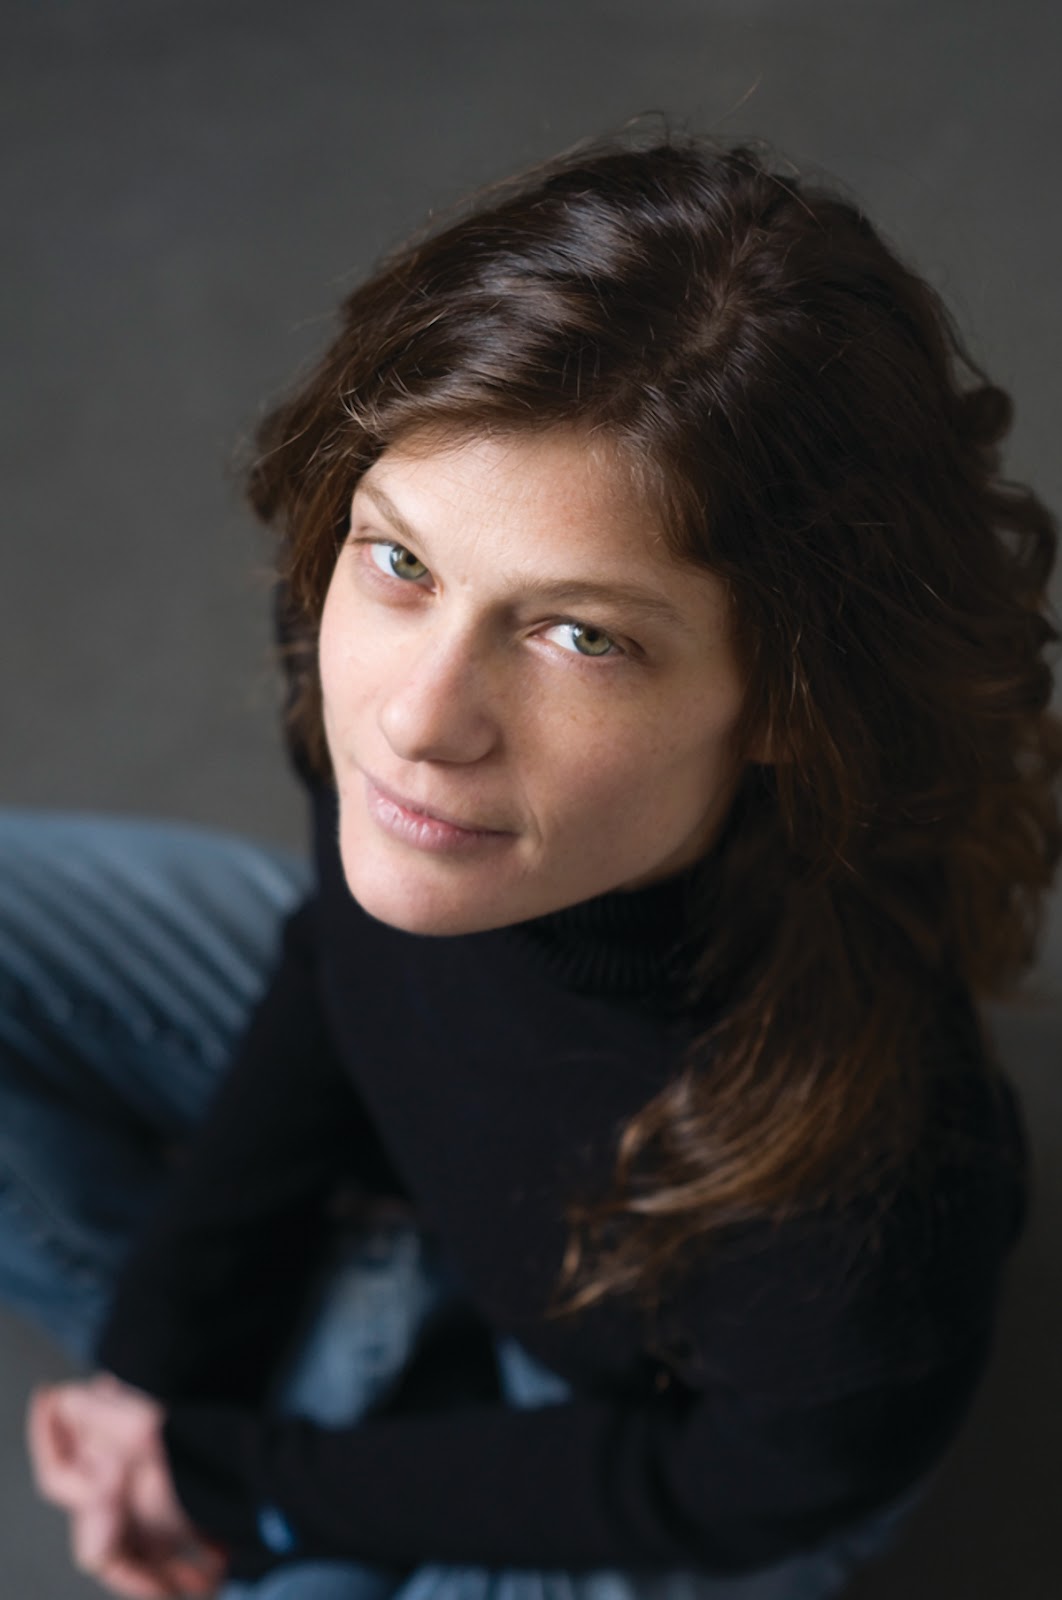 Vancouver author Marianne Apostolides